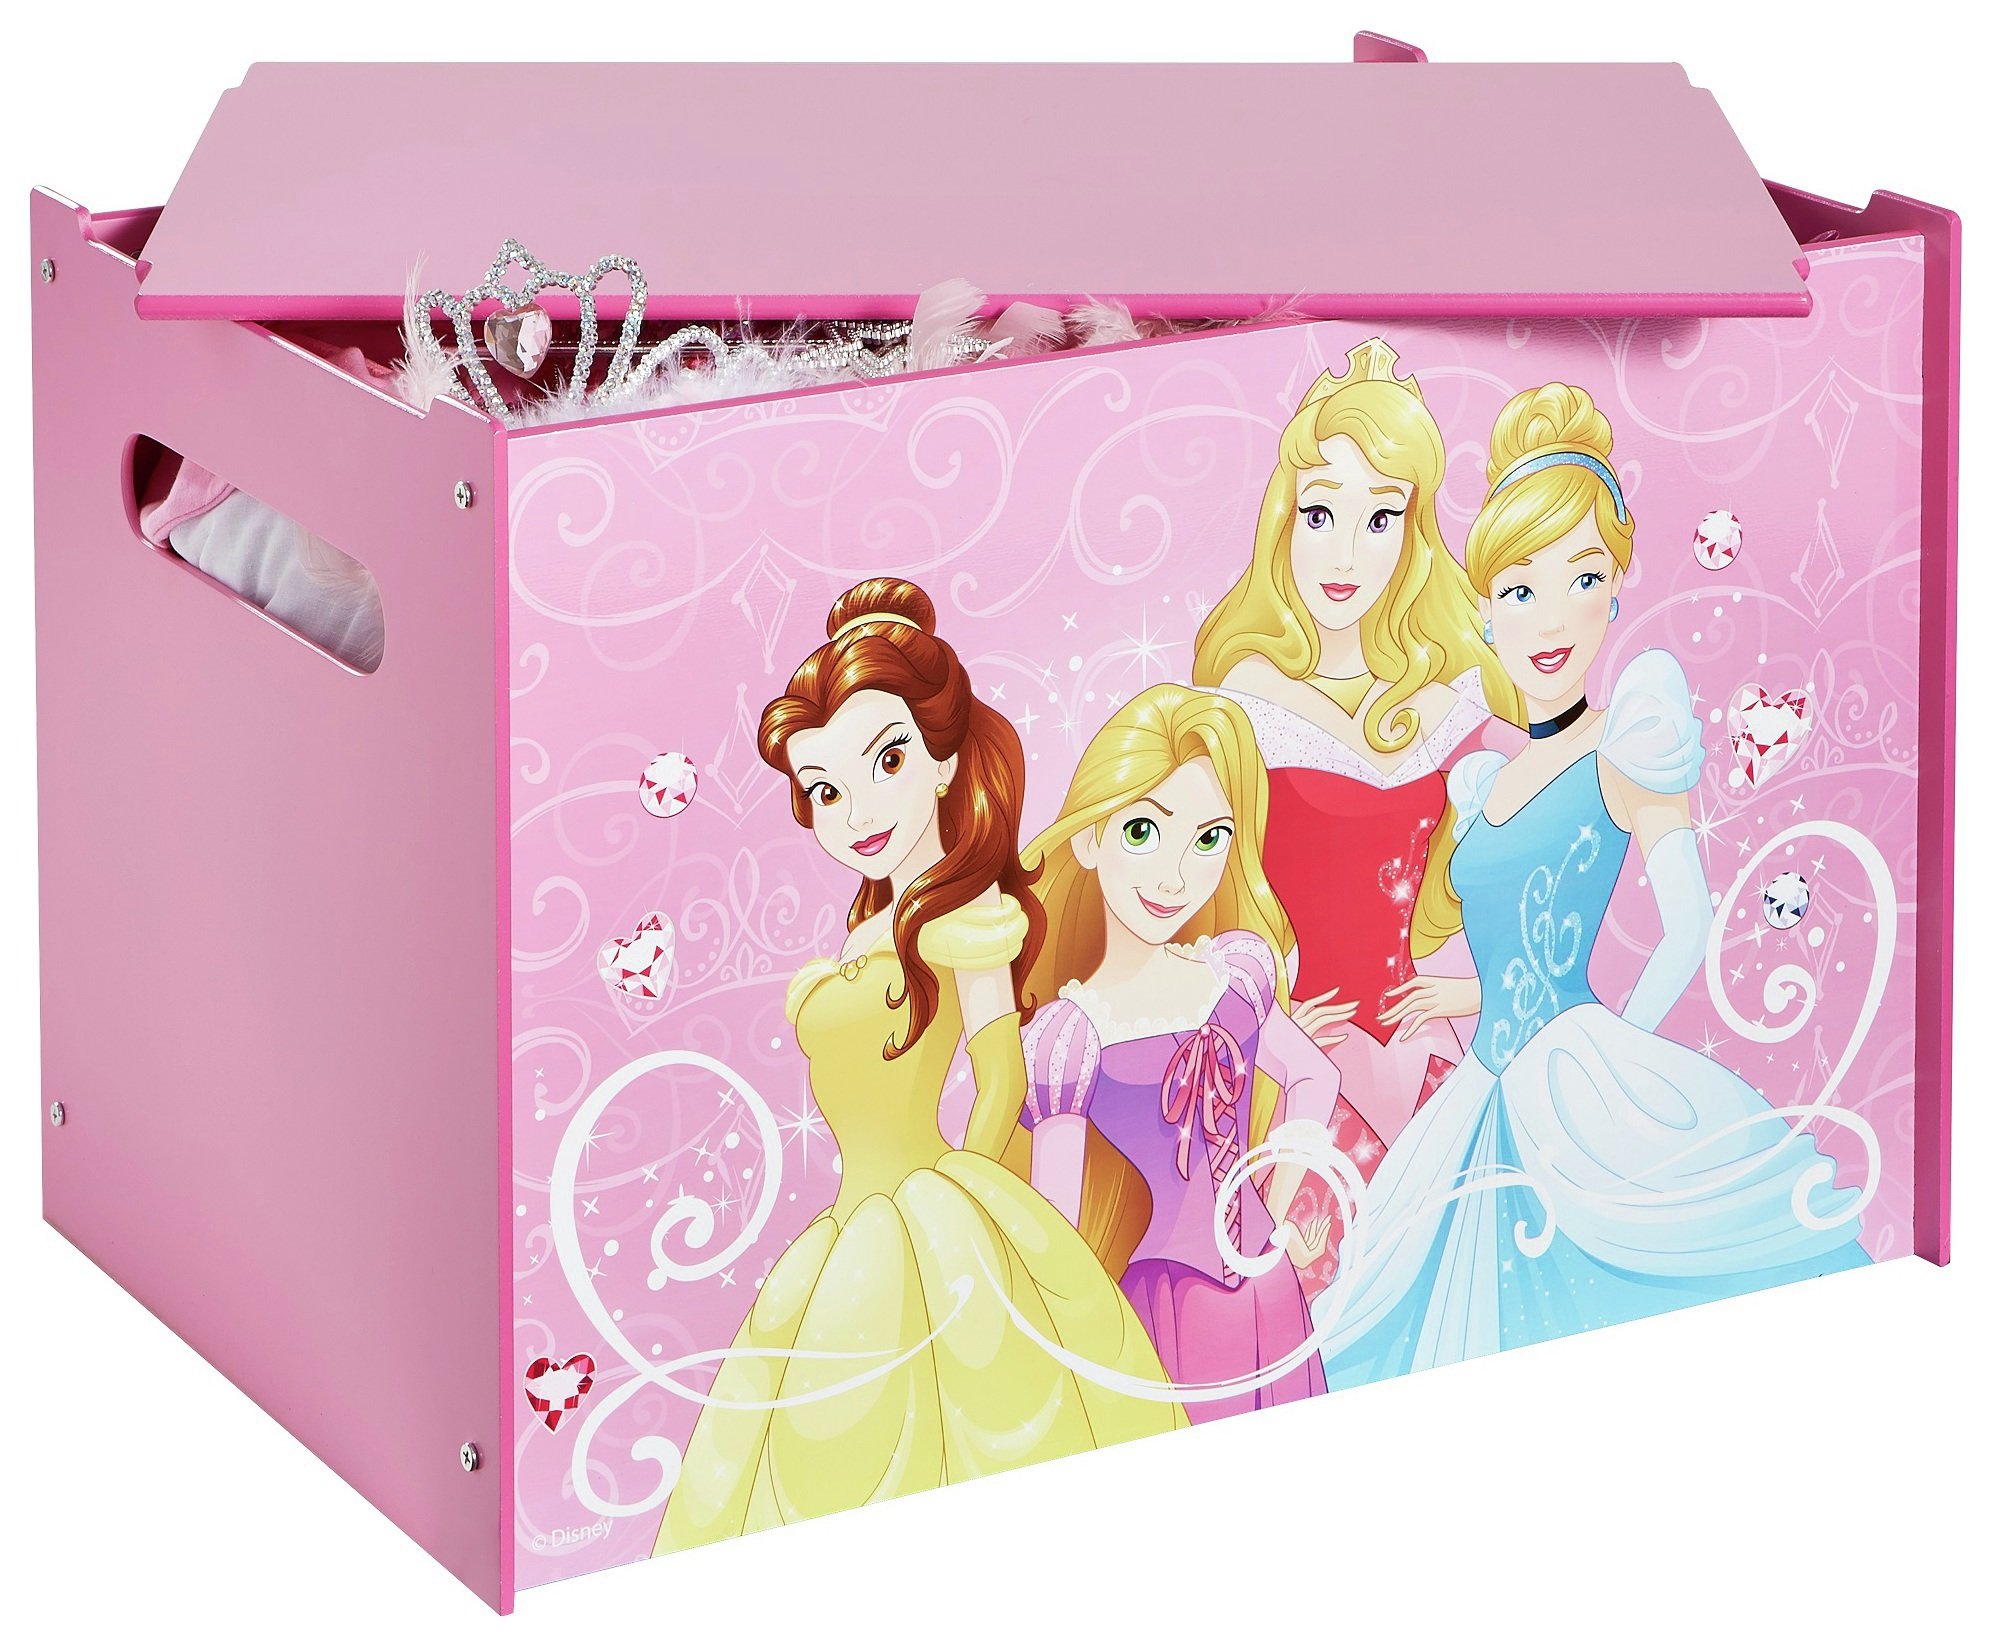 Disney Princess Toy Box Reviews